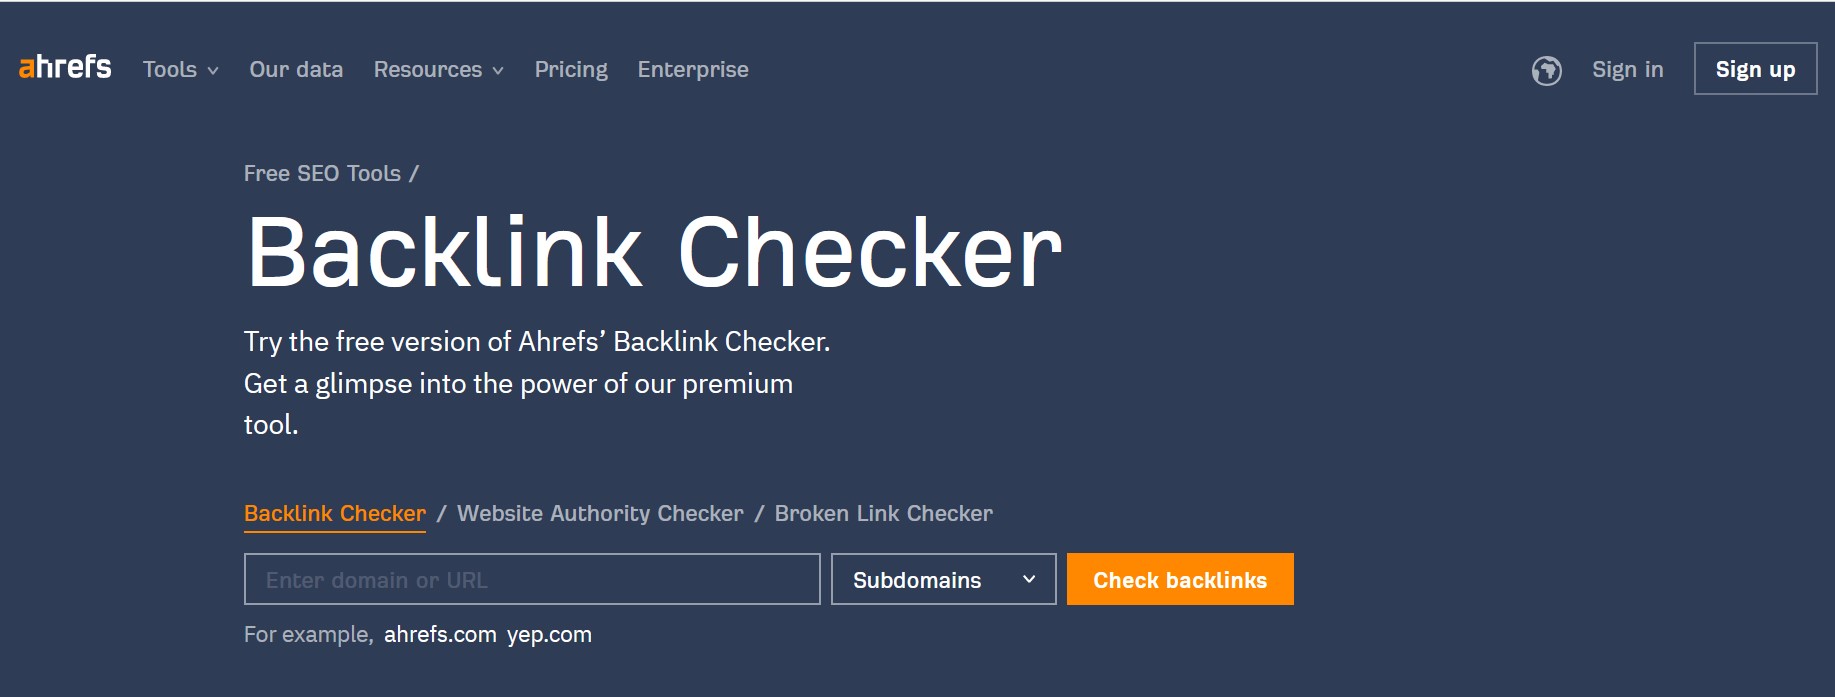 Ahref - Backlink Checker